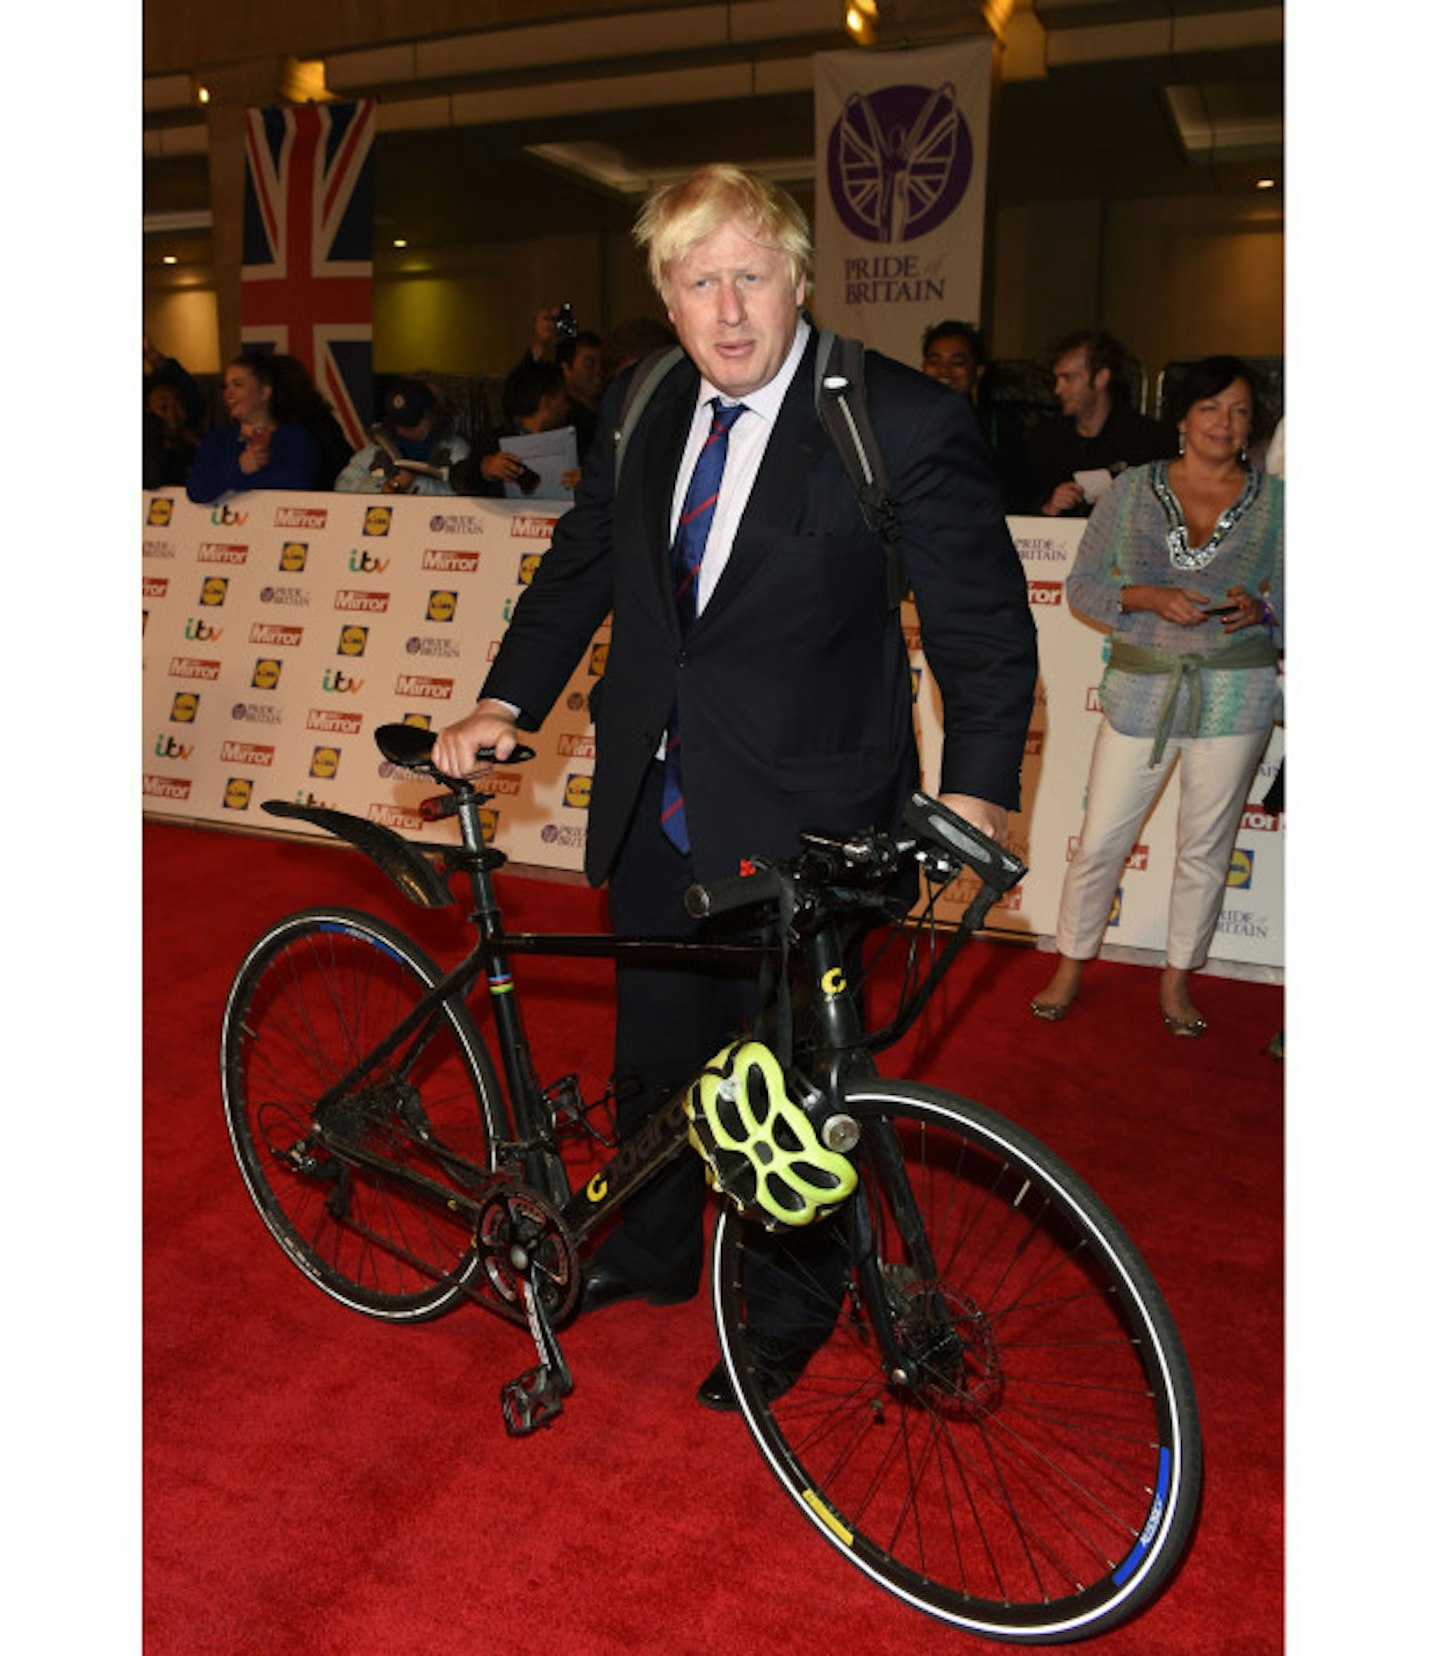 Boris Johnson and guest